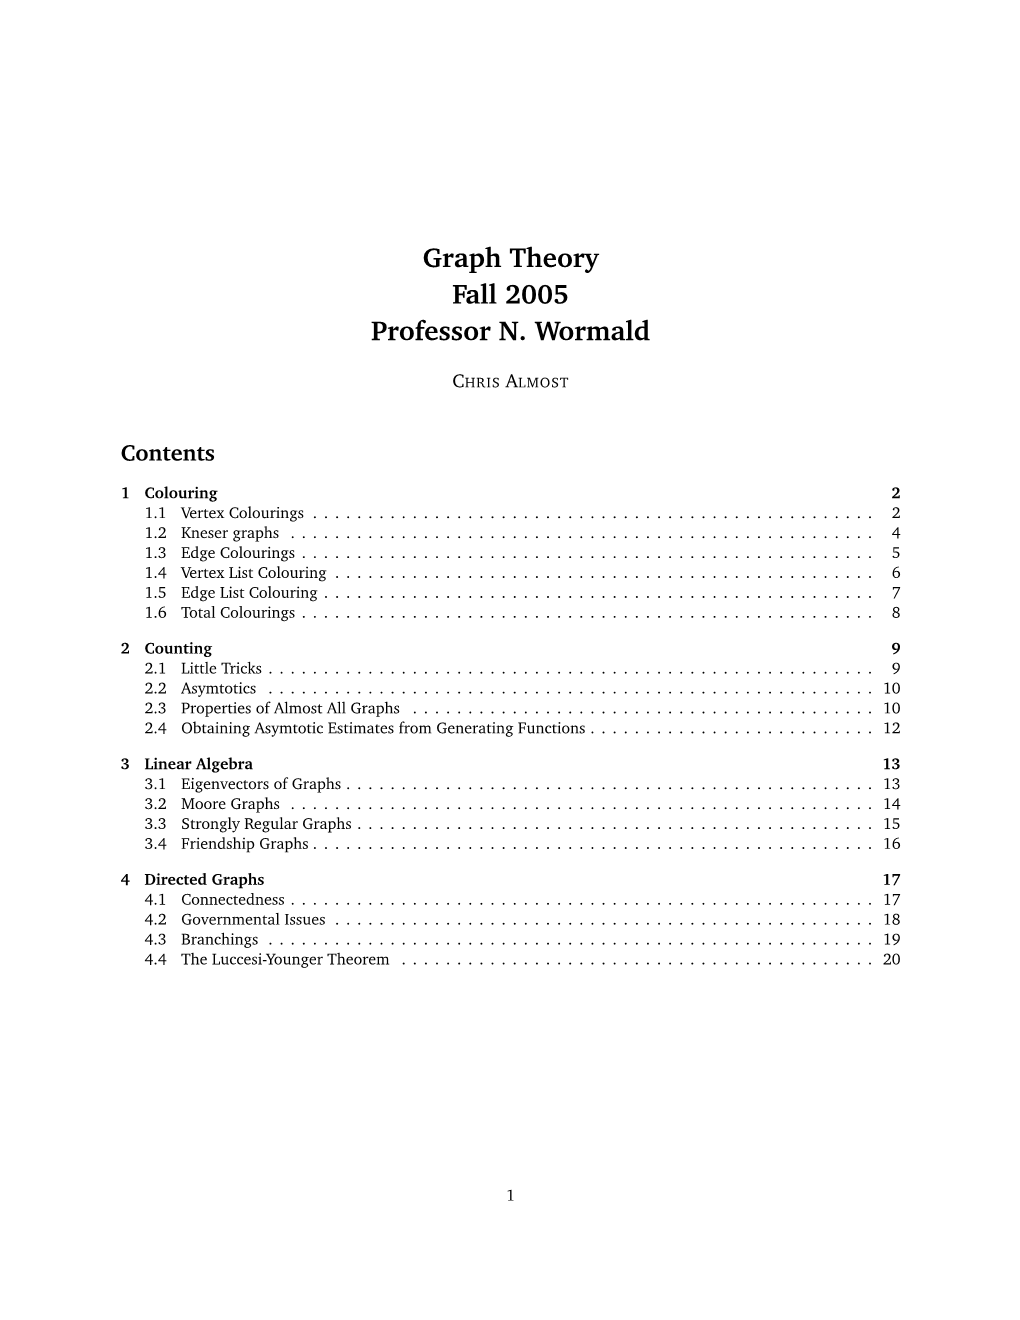 Graph Theory Fall 2005 Professor N. Wormald